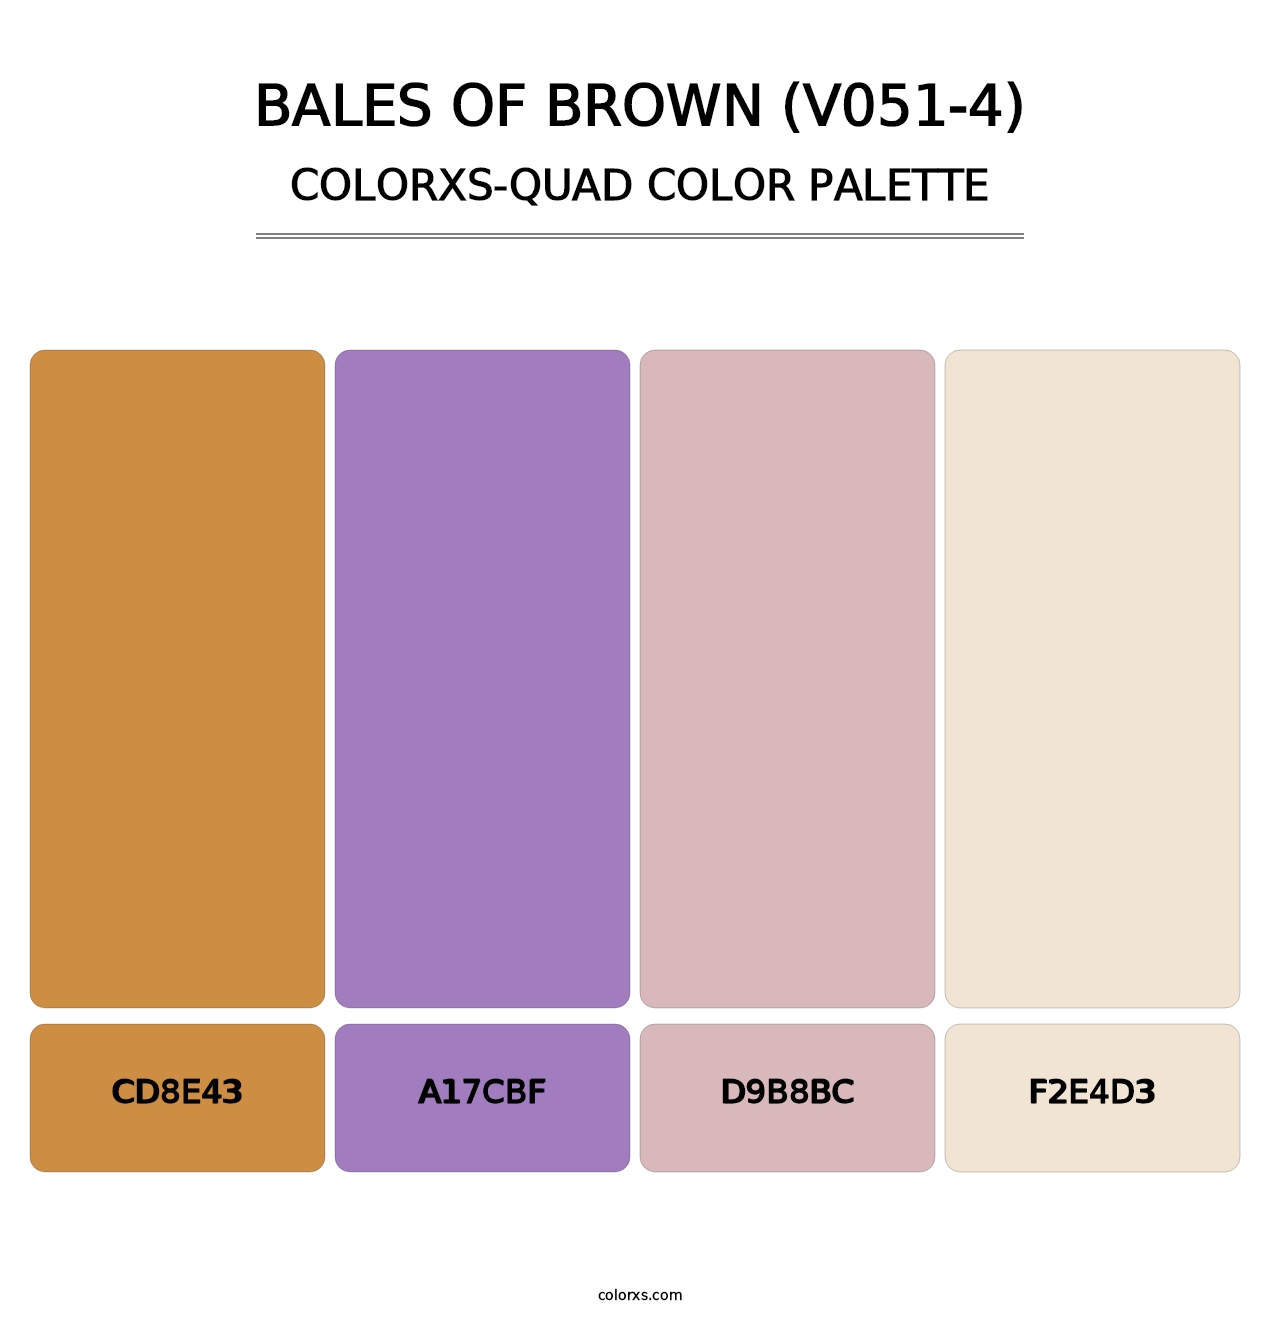 Bales of Brown (V051-4) - Colorxs Quad Palette